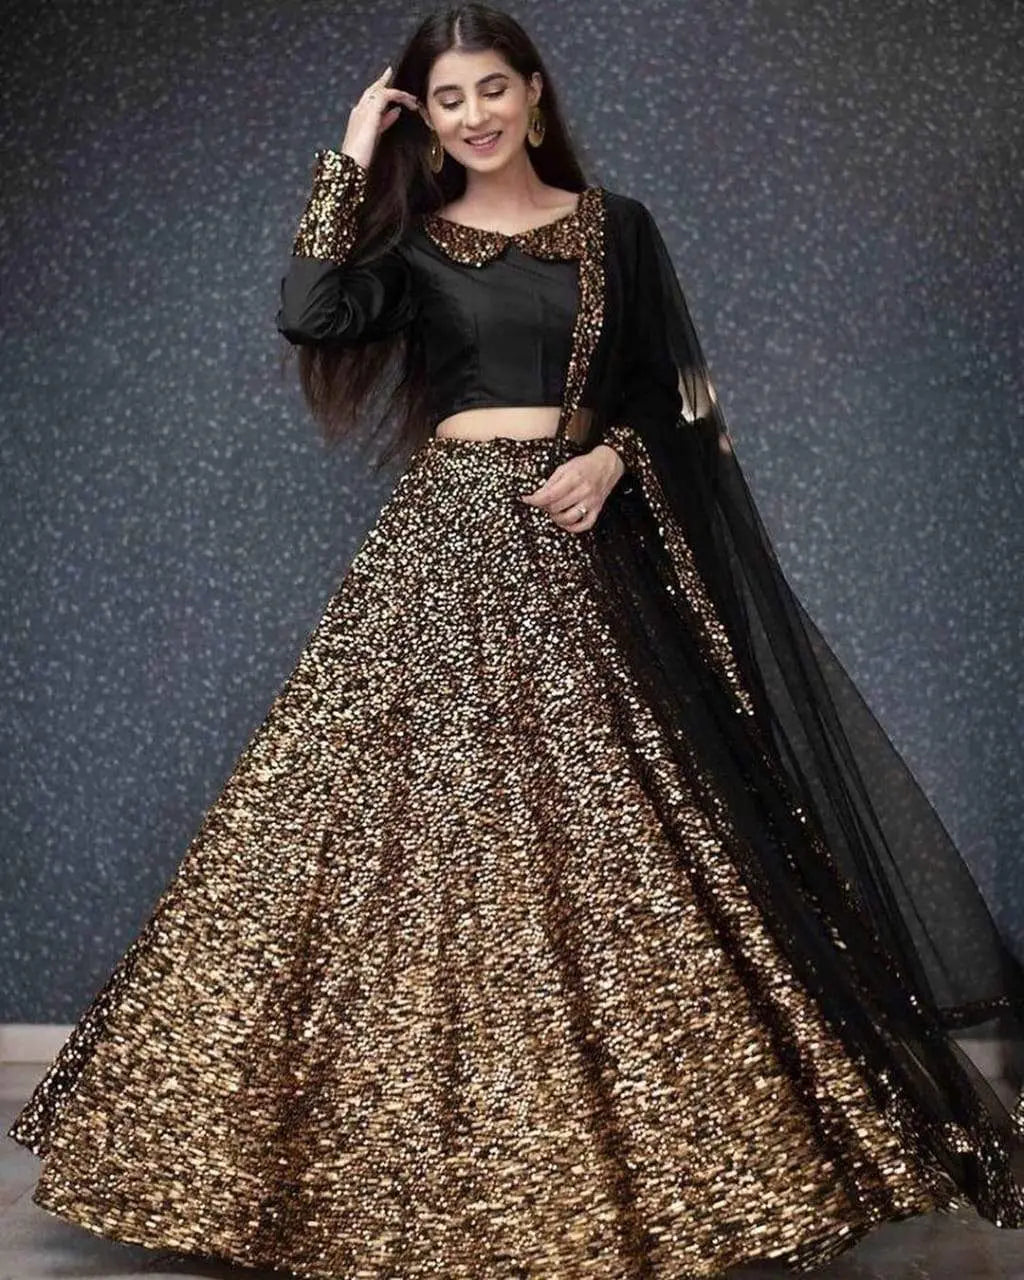 Lehenga Choli in Golden Sequence Skirt with Black Blouse